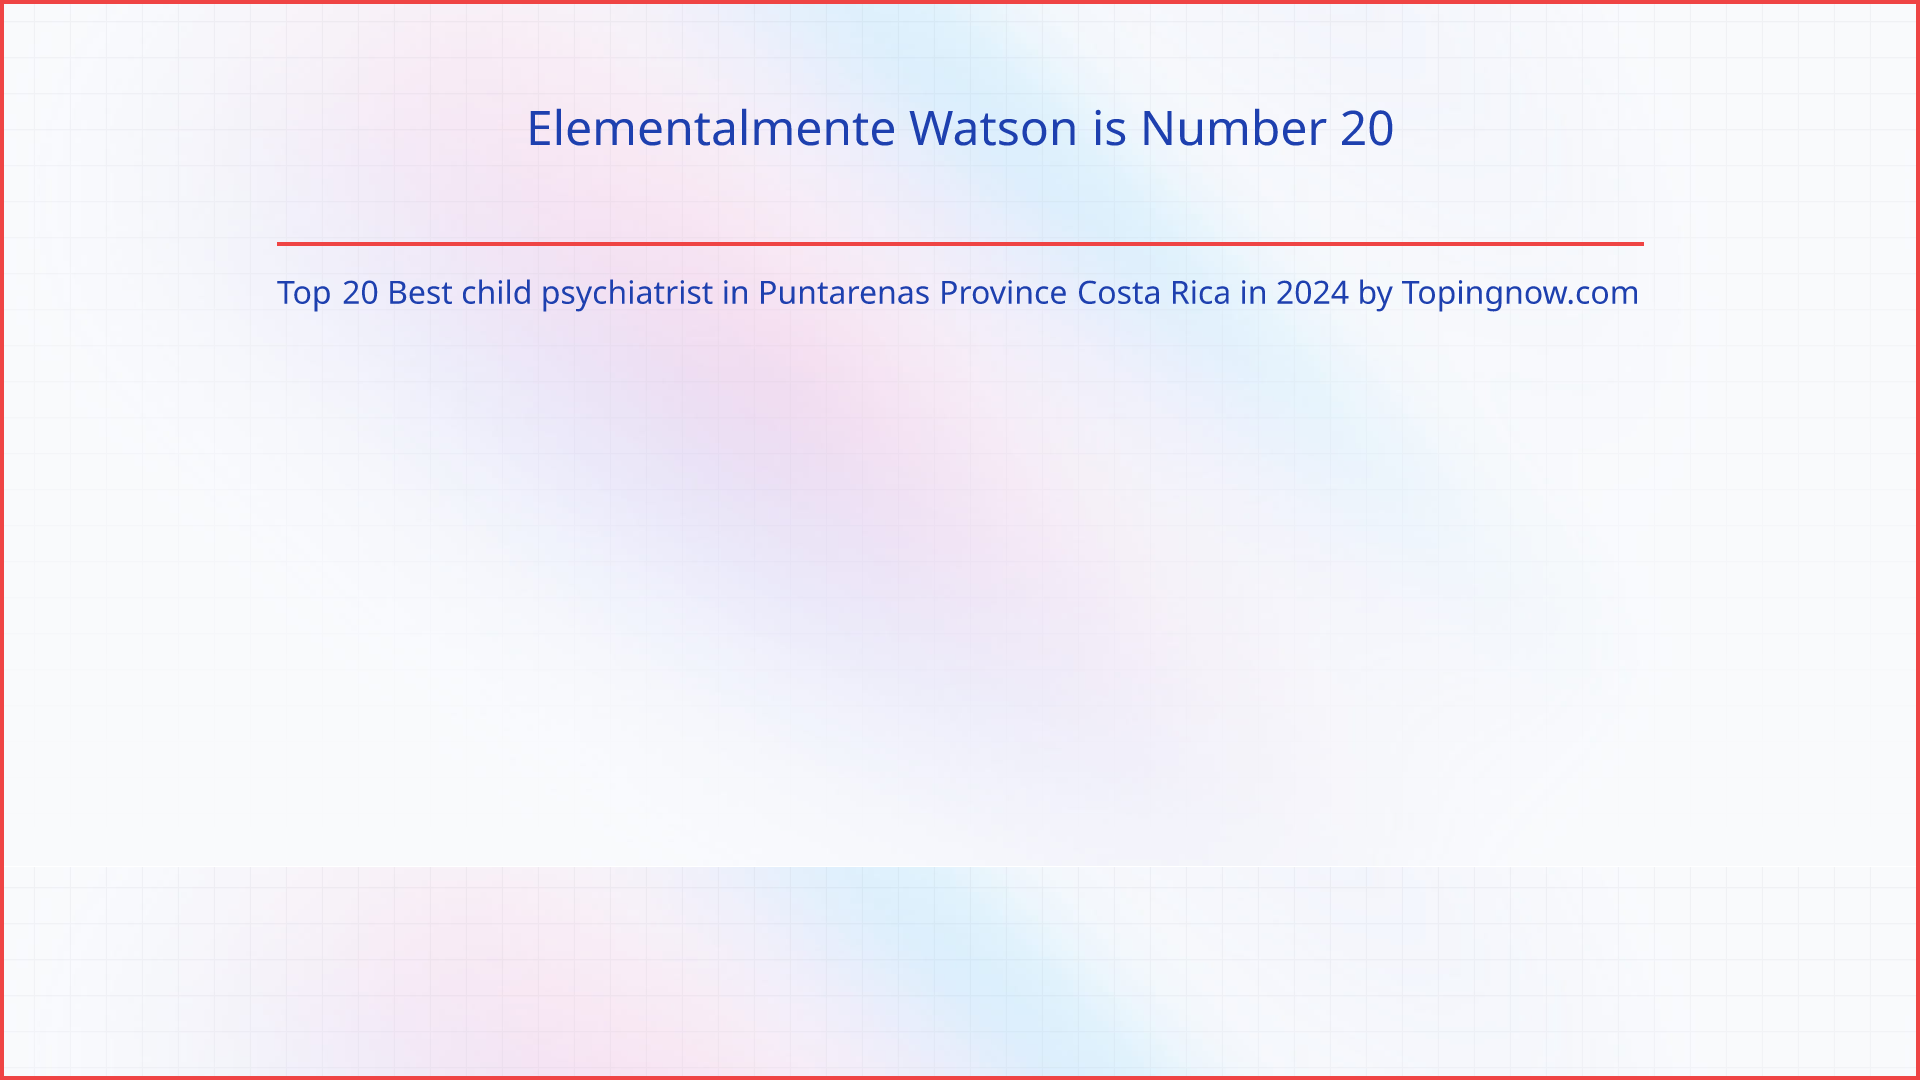 Elementalmente Watson: Top 20 Best child psychiatrist in Puntarenas Province Costa Rica in 2024